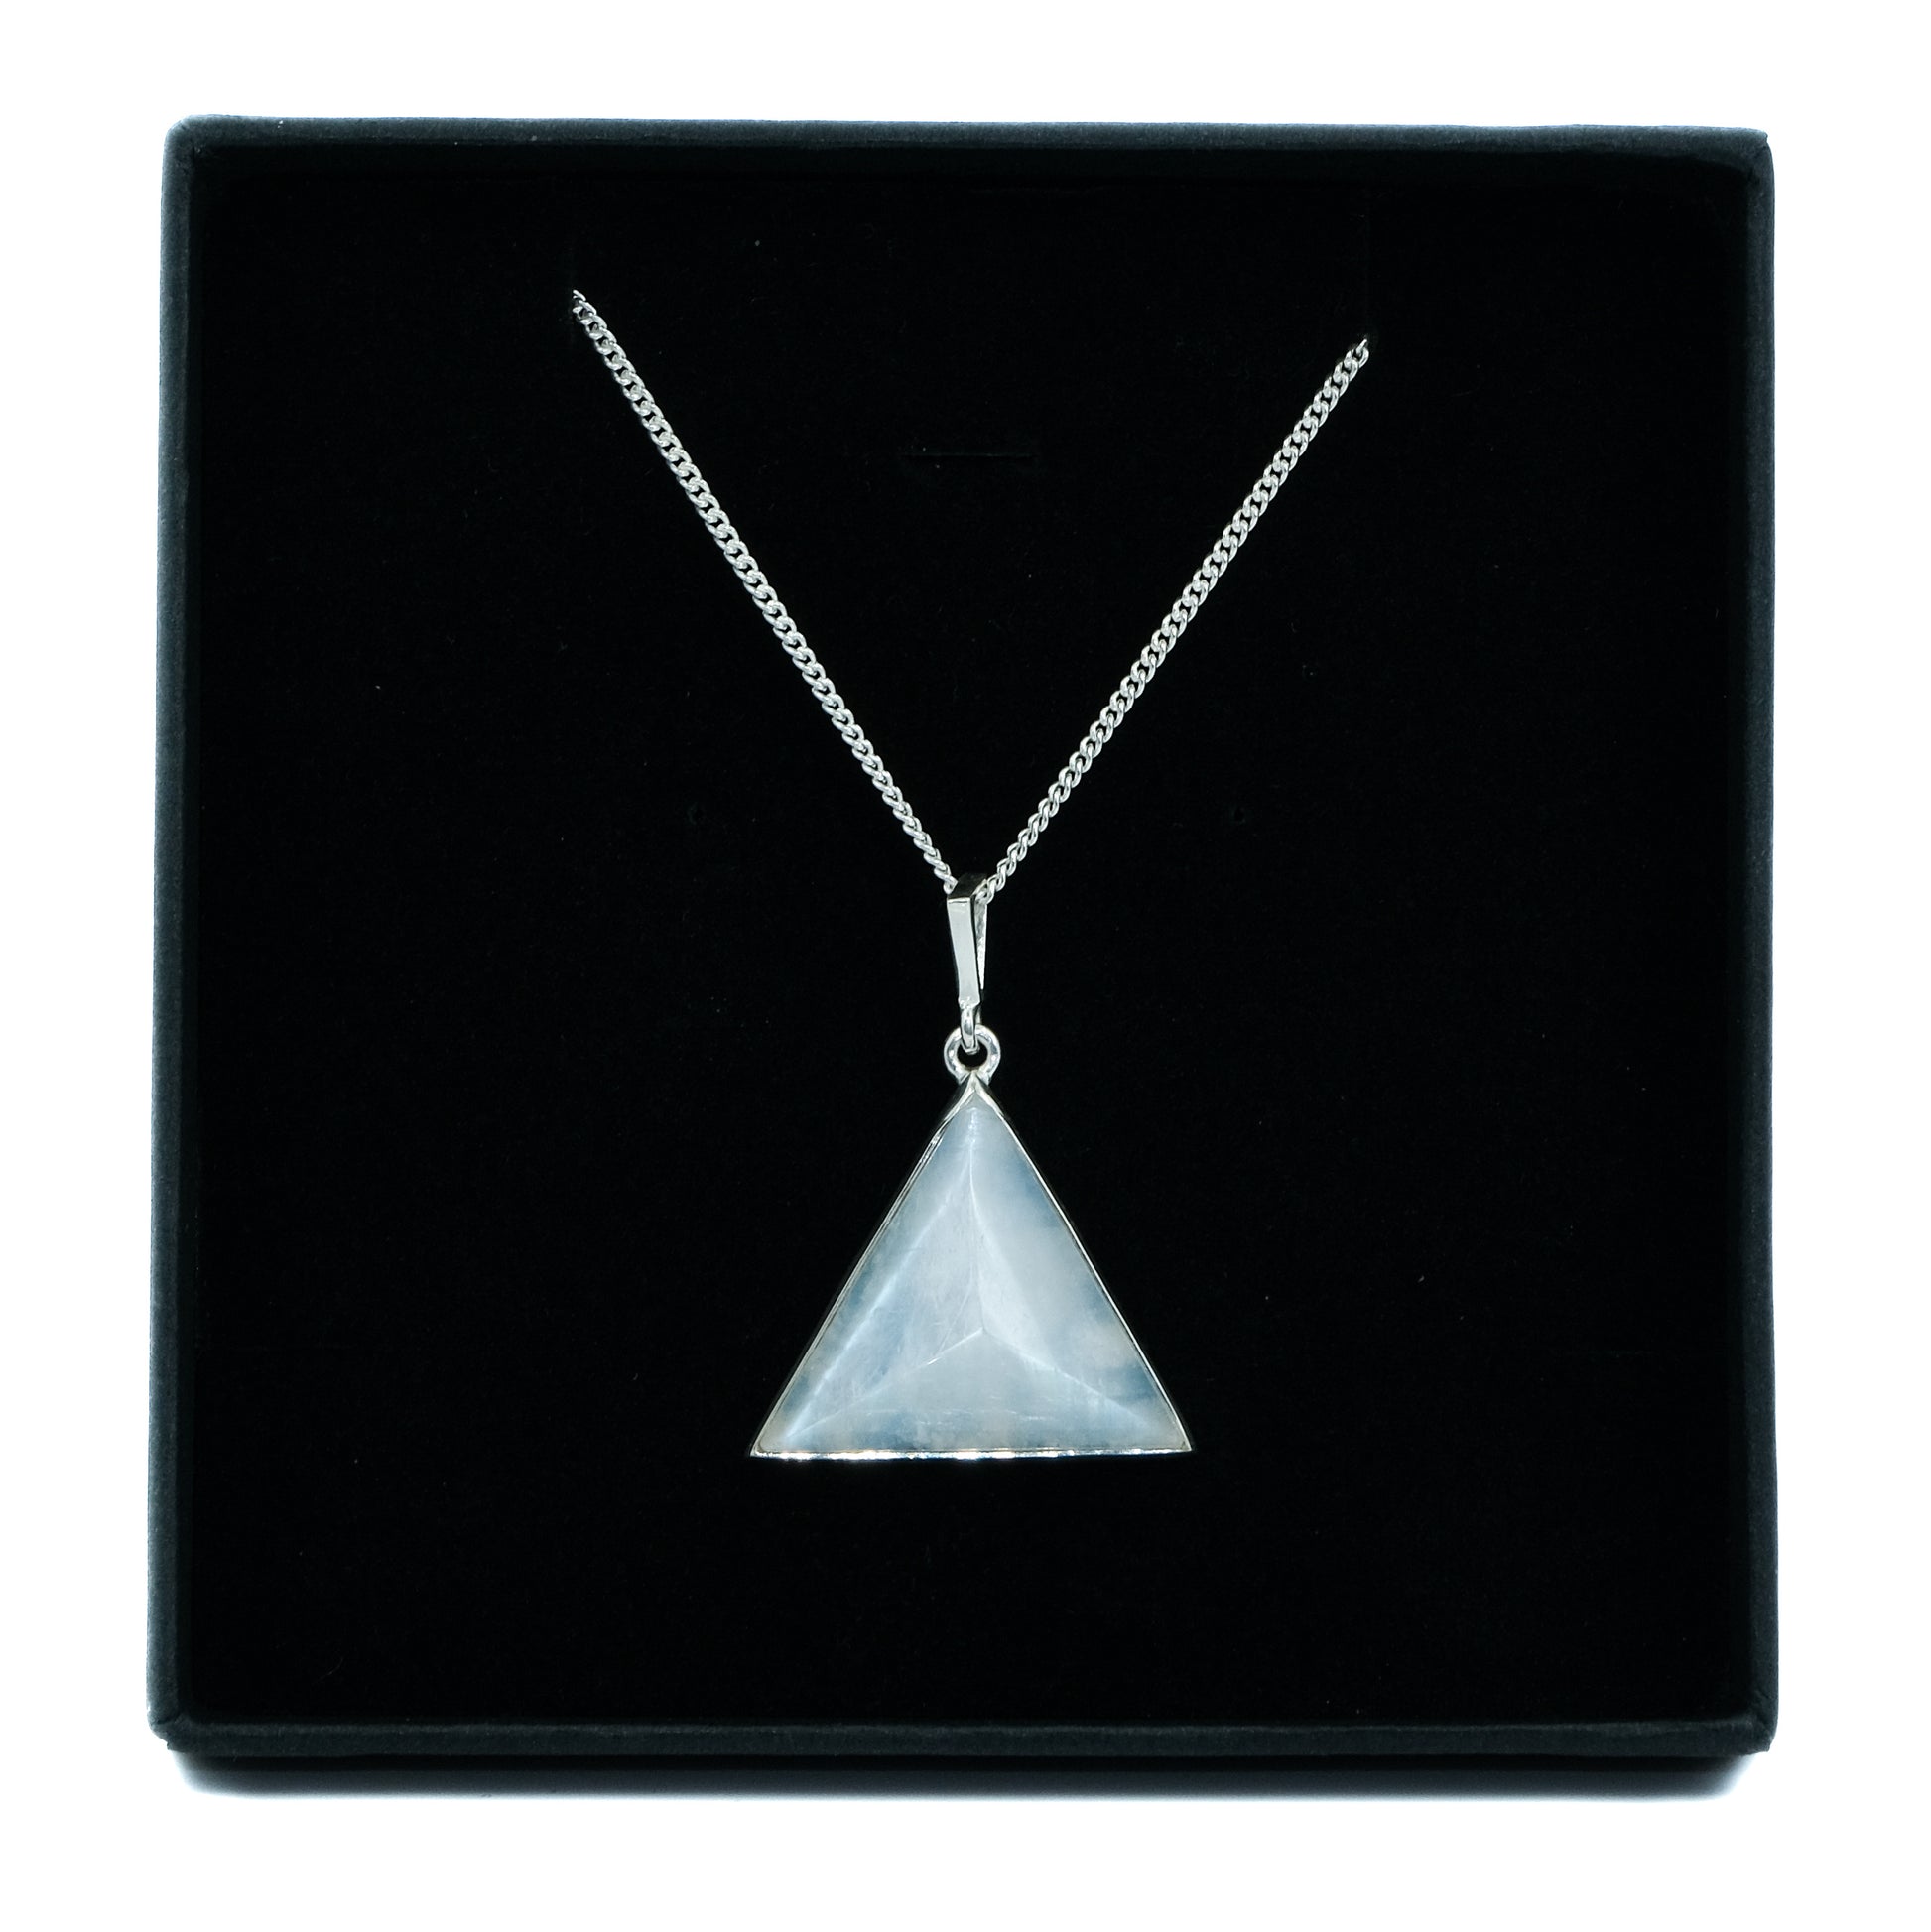 A Moonstone gemstone triangle pendant in a jewellery box